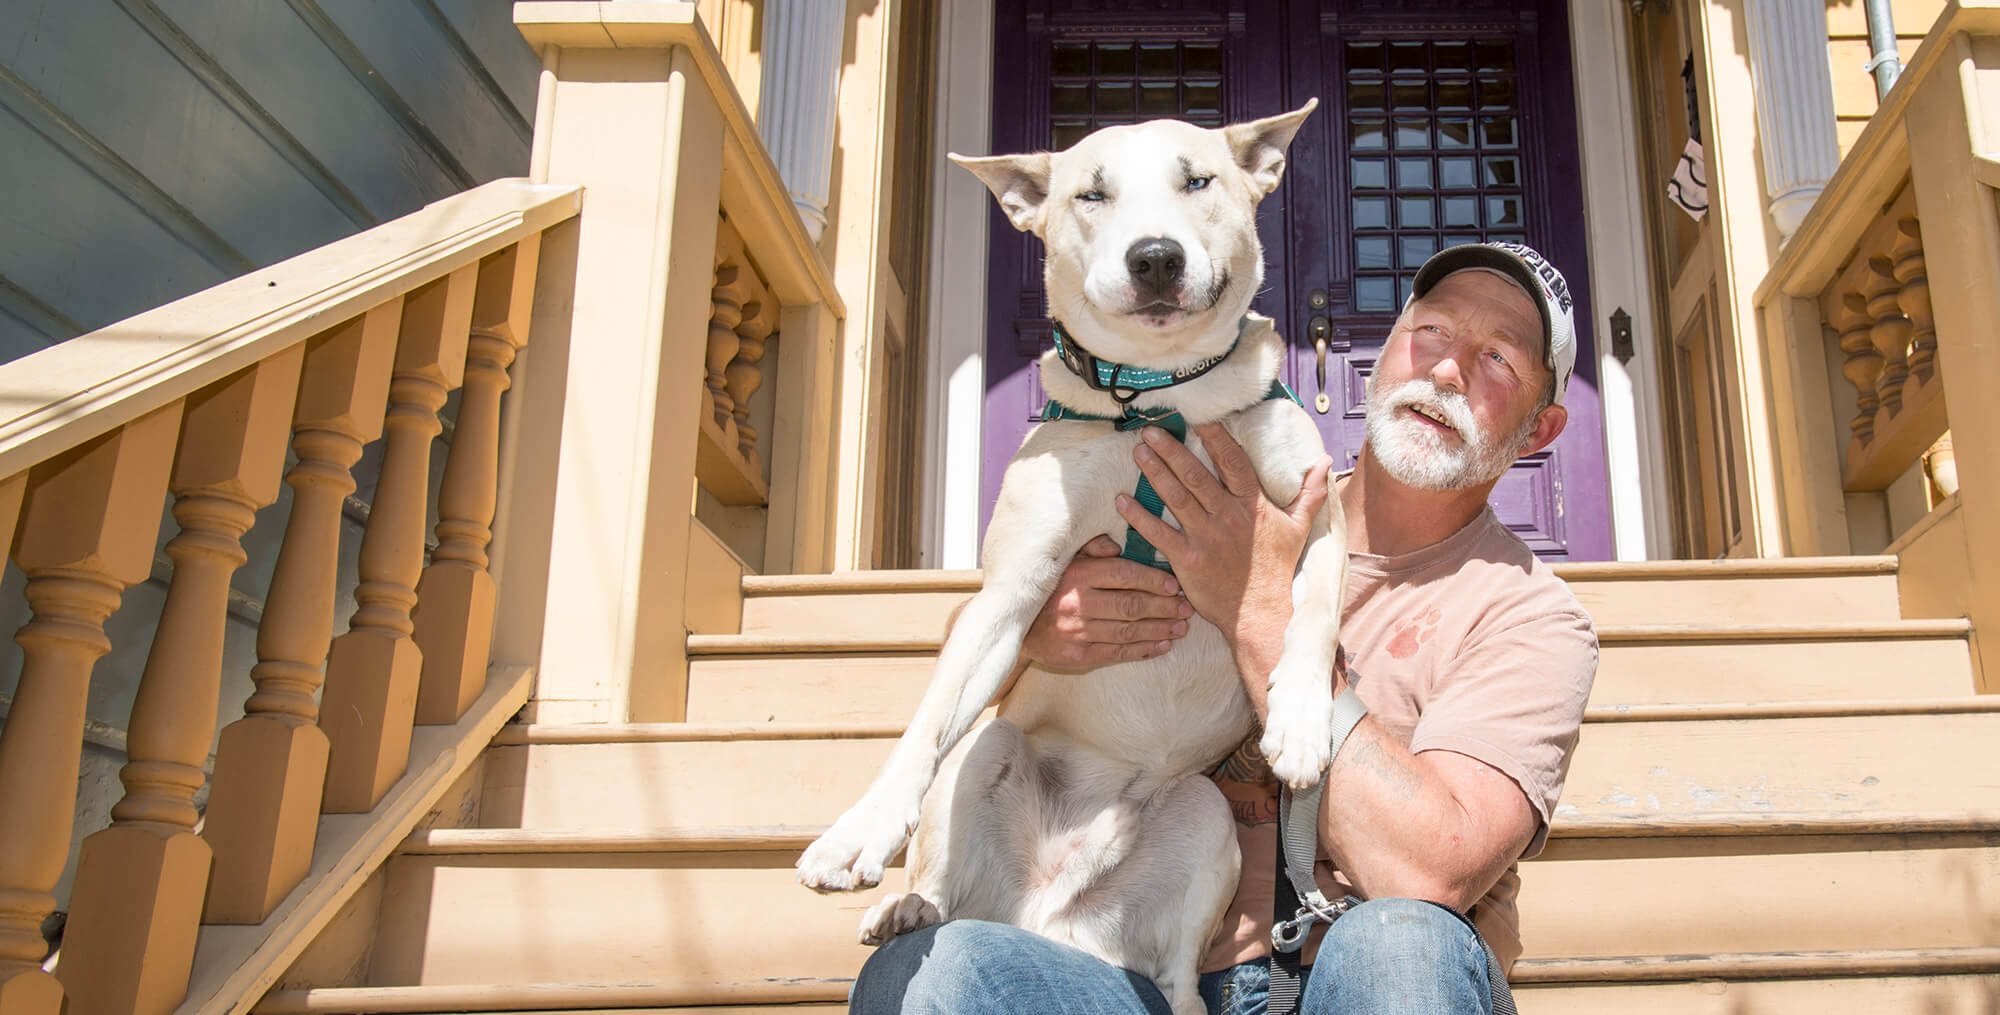 Man sitting on steps holding white dog